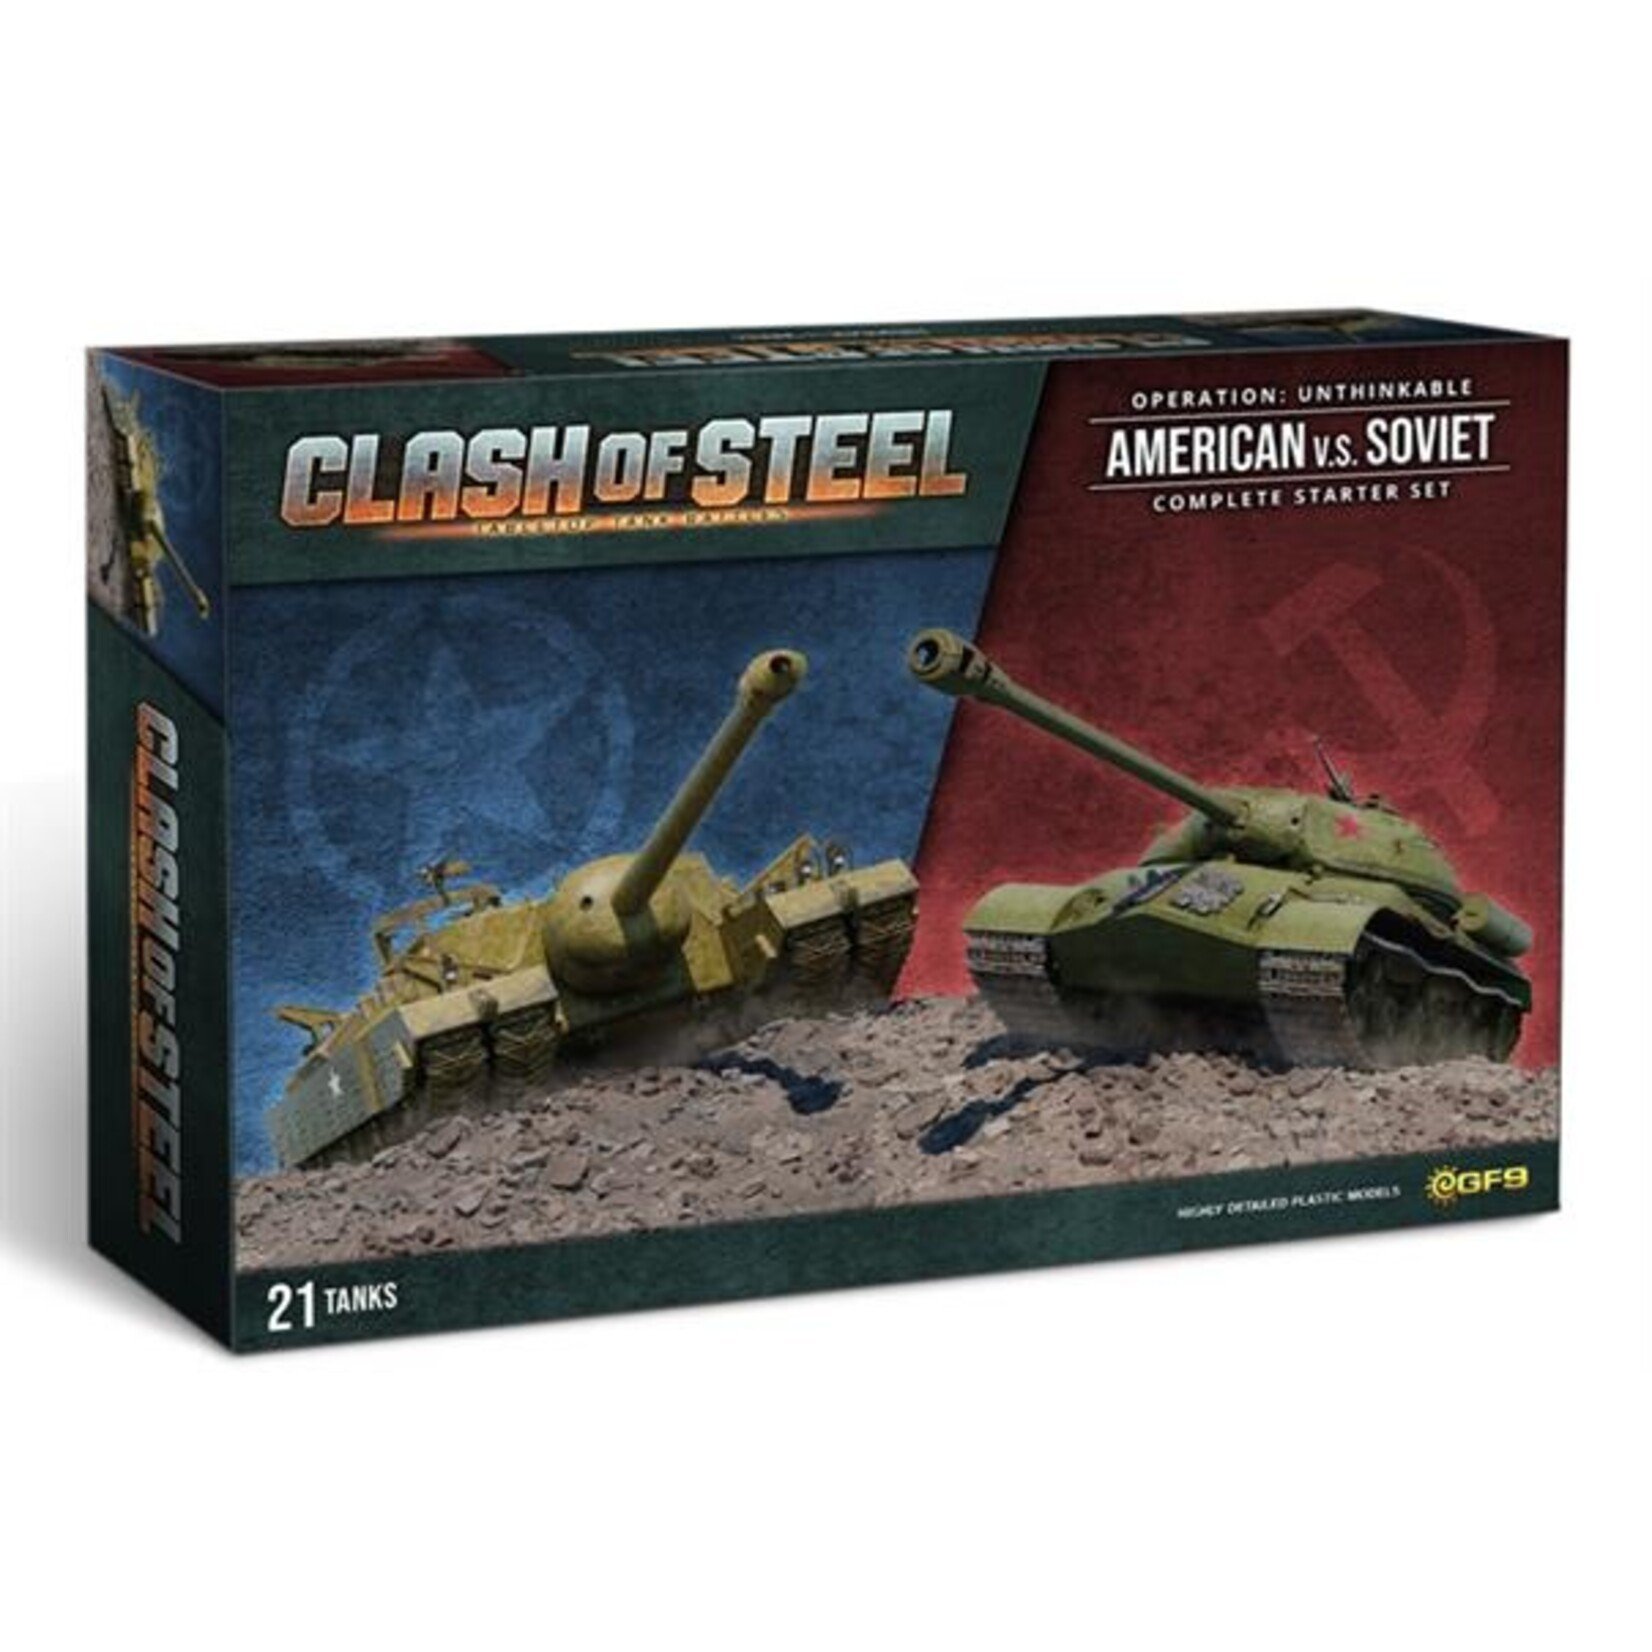 Clash Of Steel Starter Set - Operation: Unthinkable American VS Soviet